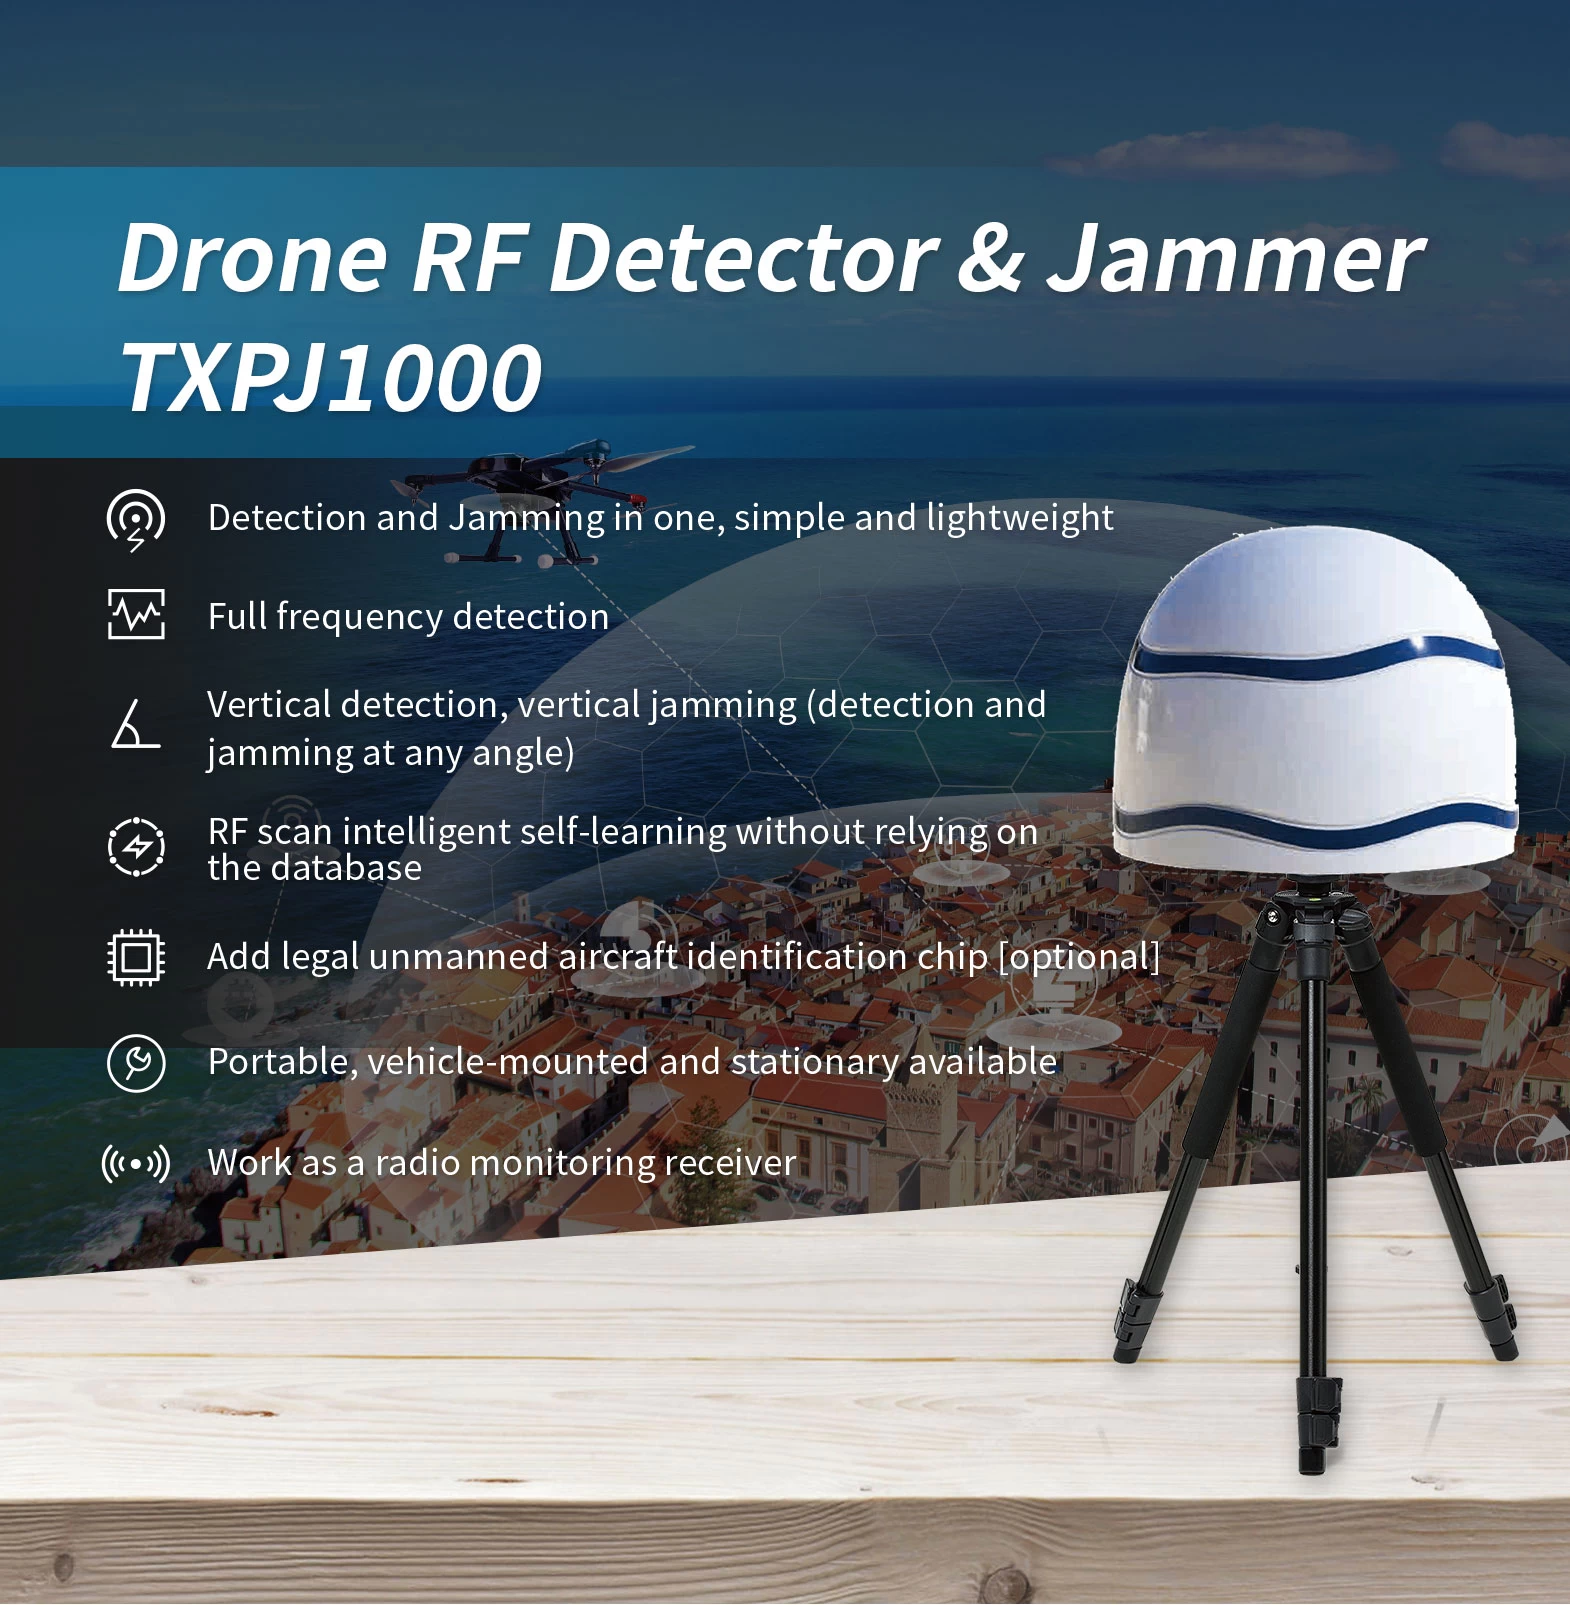 Drone RF Detector & Jammer TXPJ1000 - Drone Defense - 1